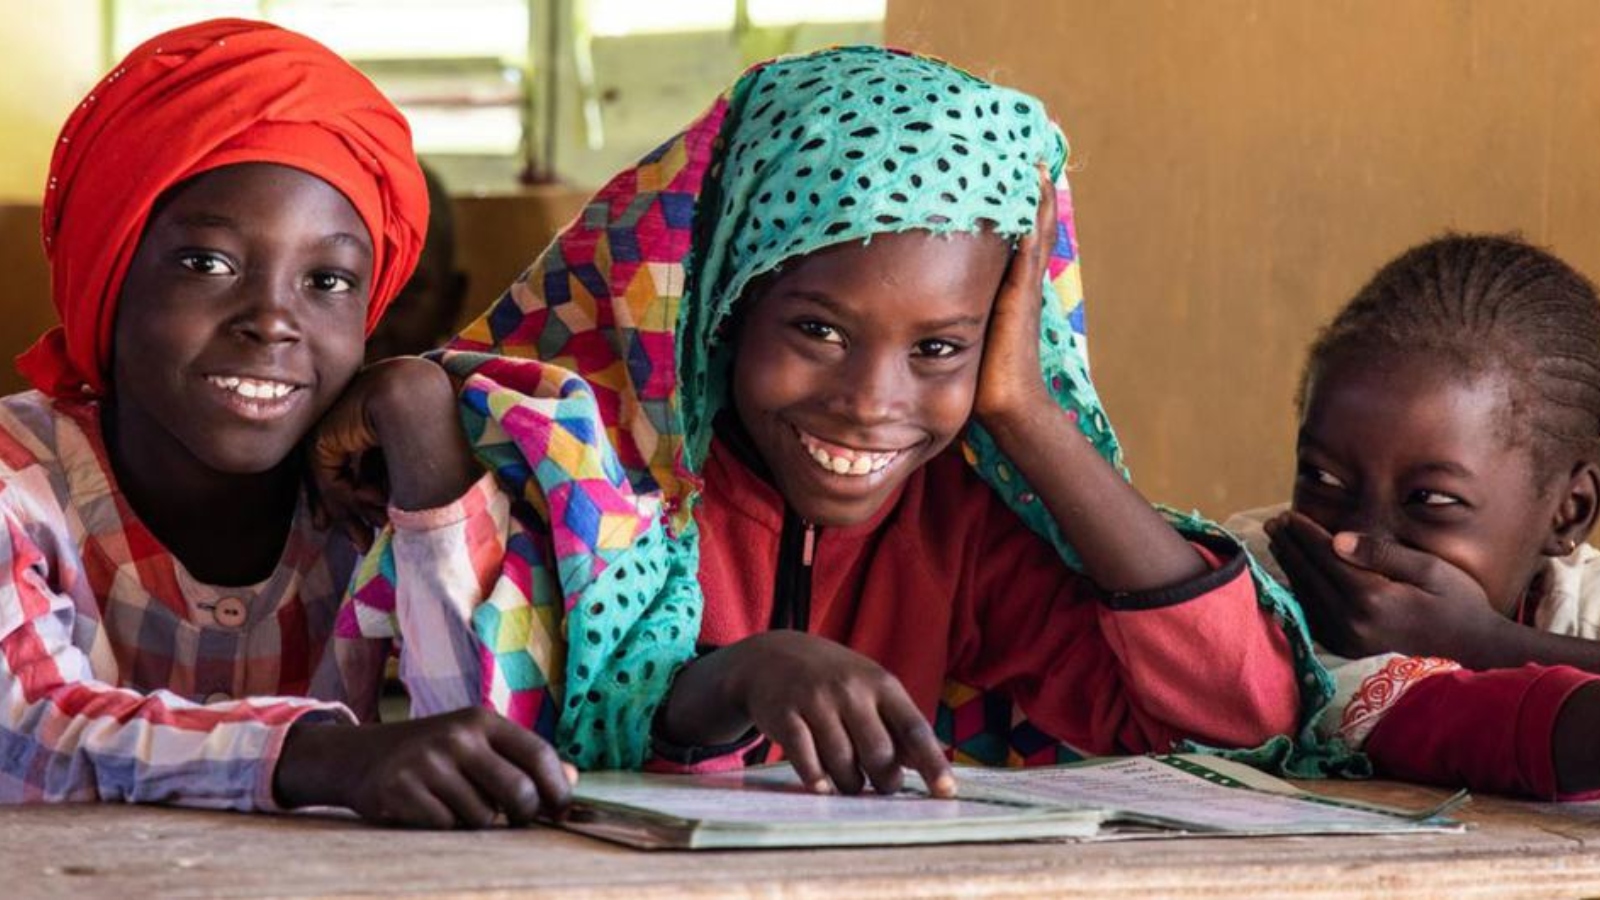 © UNICEF/Vincent Tremeau Girls study together at school in Senegal.